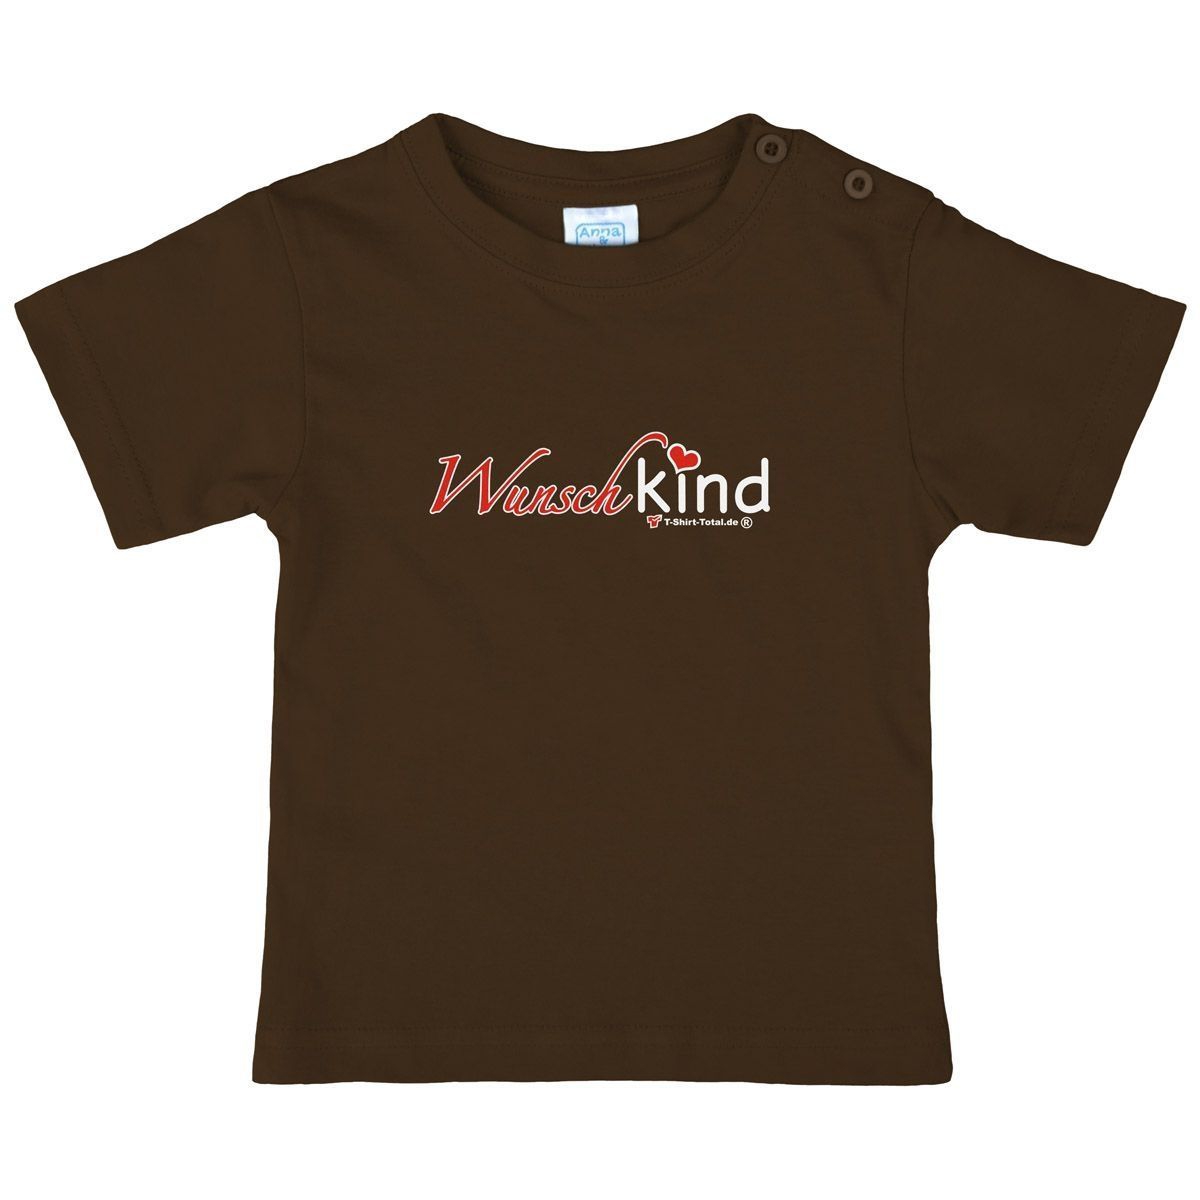 Wunschkind Kinder T-Shirt braun 56 / 62